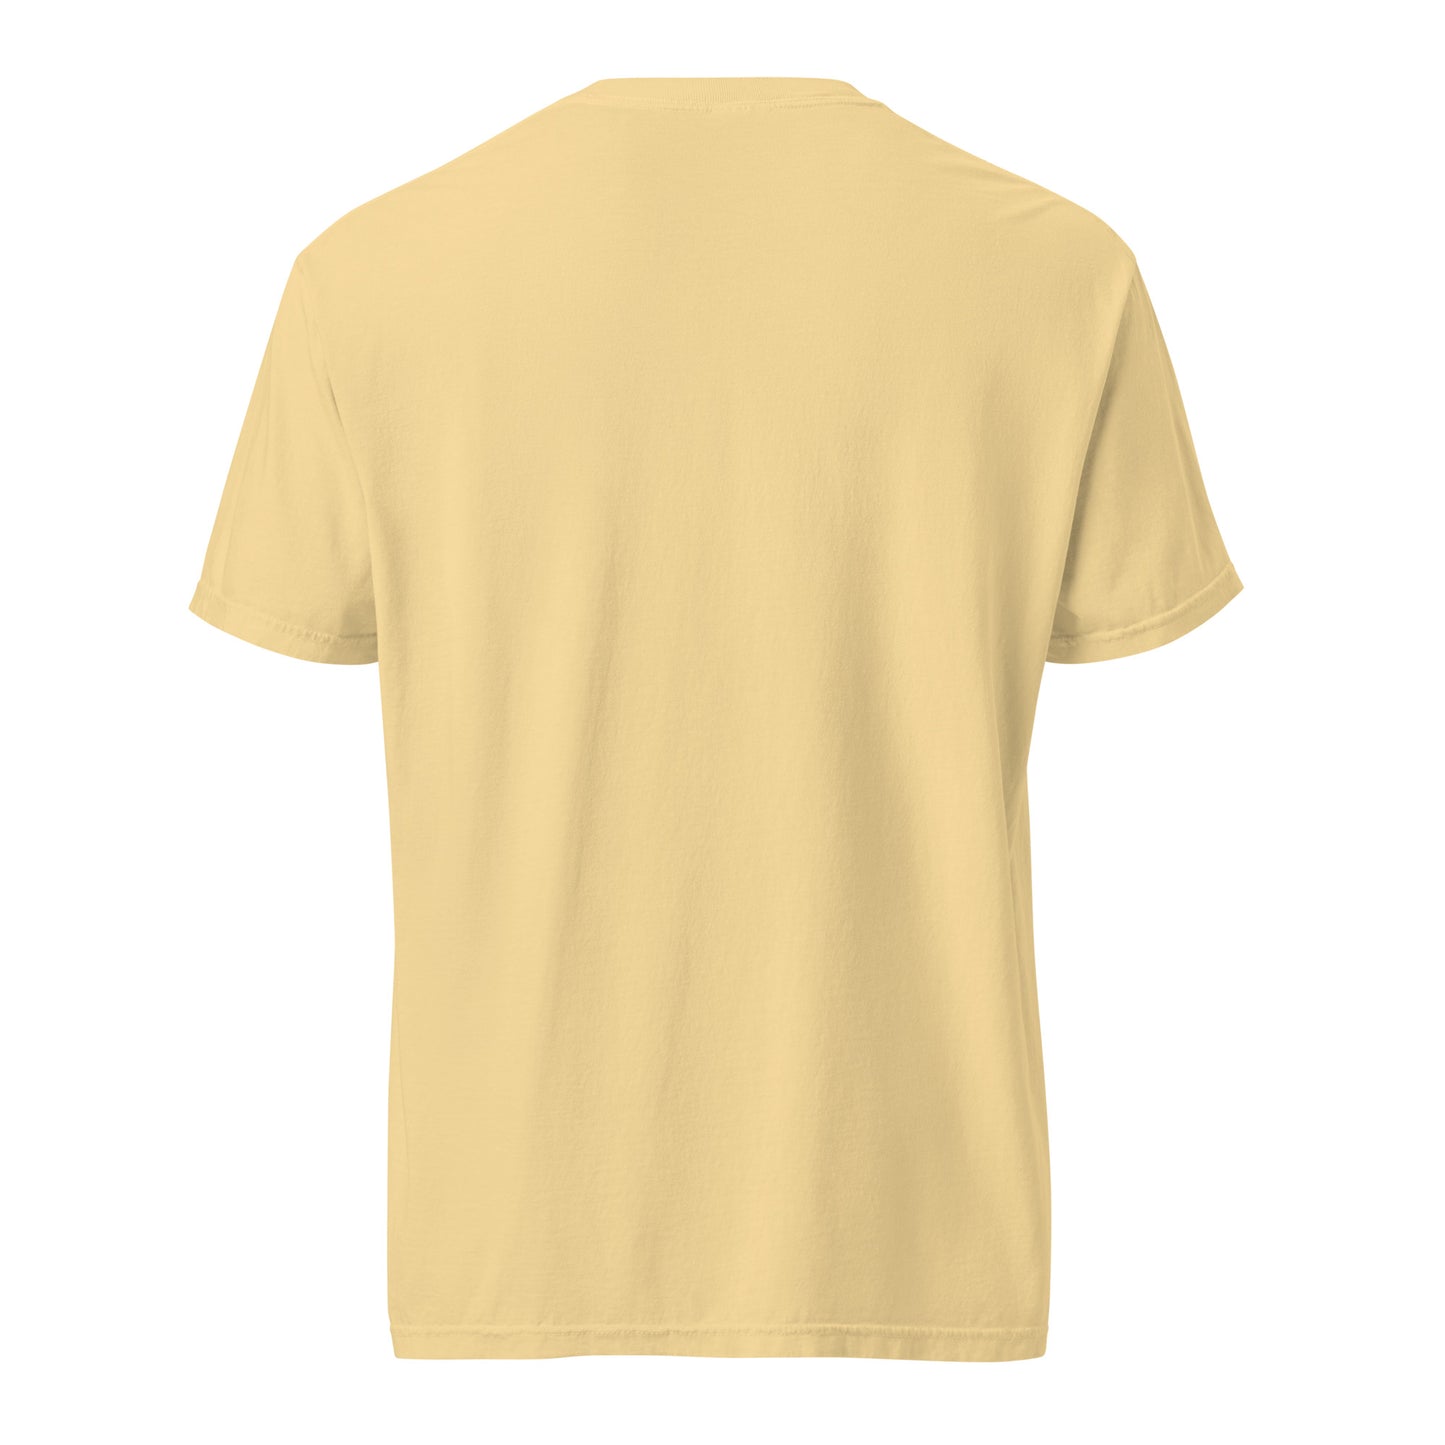 Unisex garment-dyed heavyweight t-shirt "Skating is an art form"